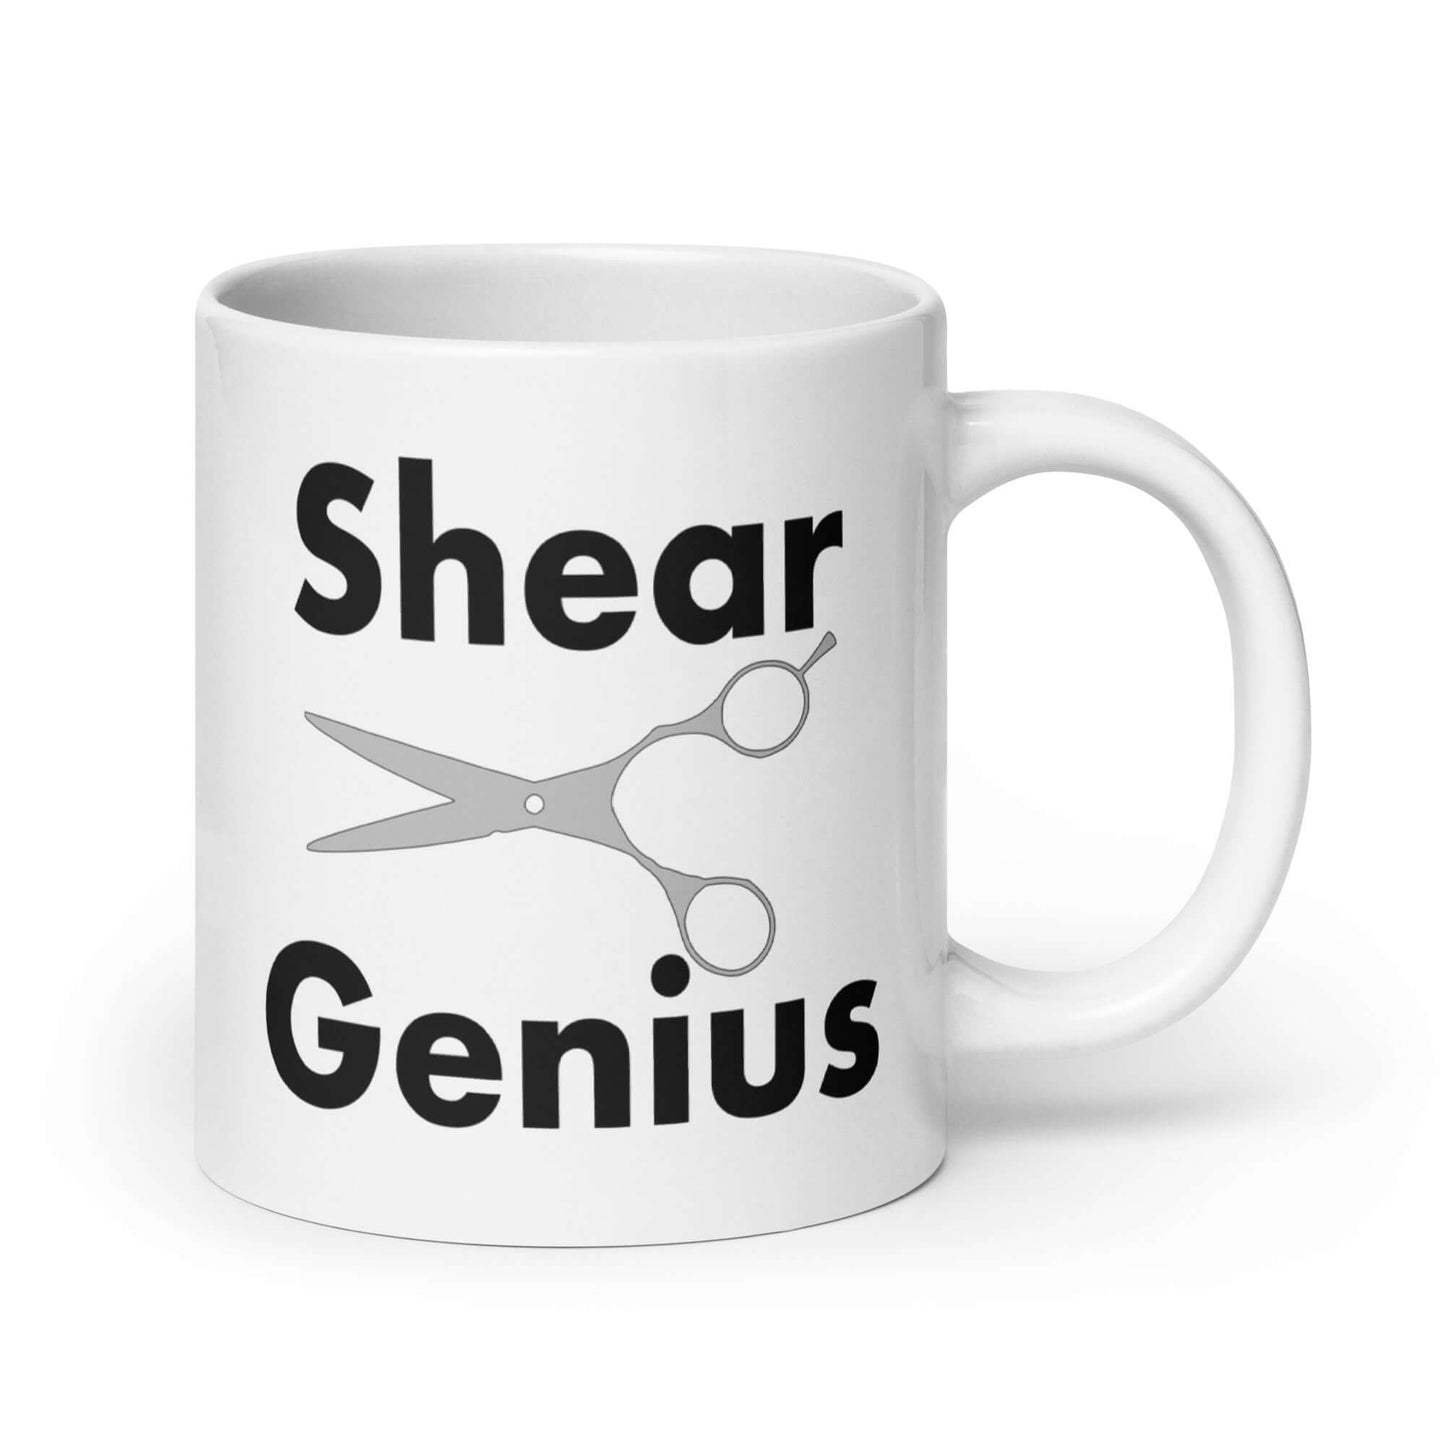 Shear genius hairstylist pun mug